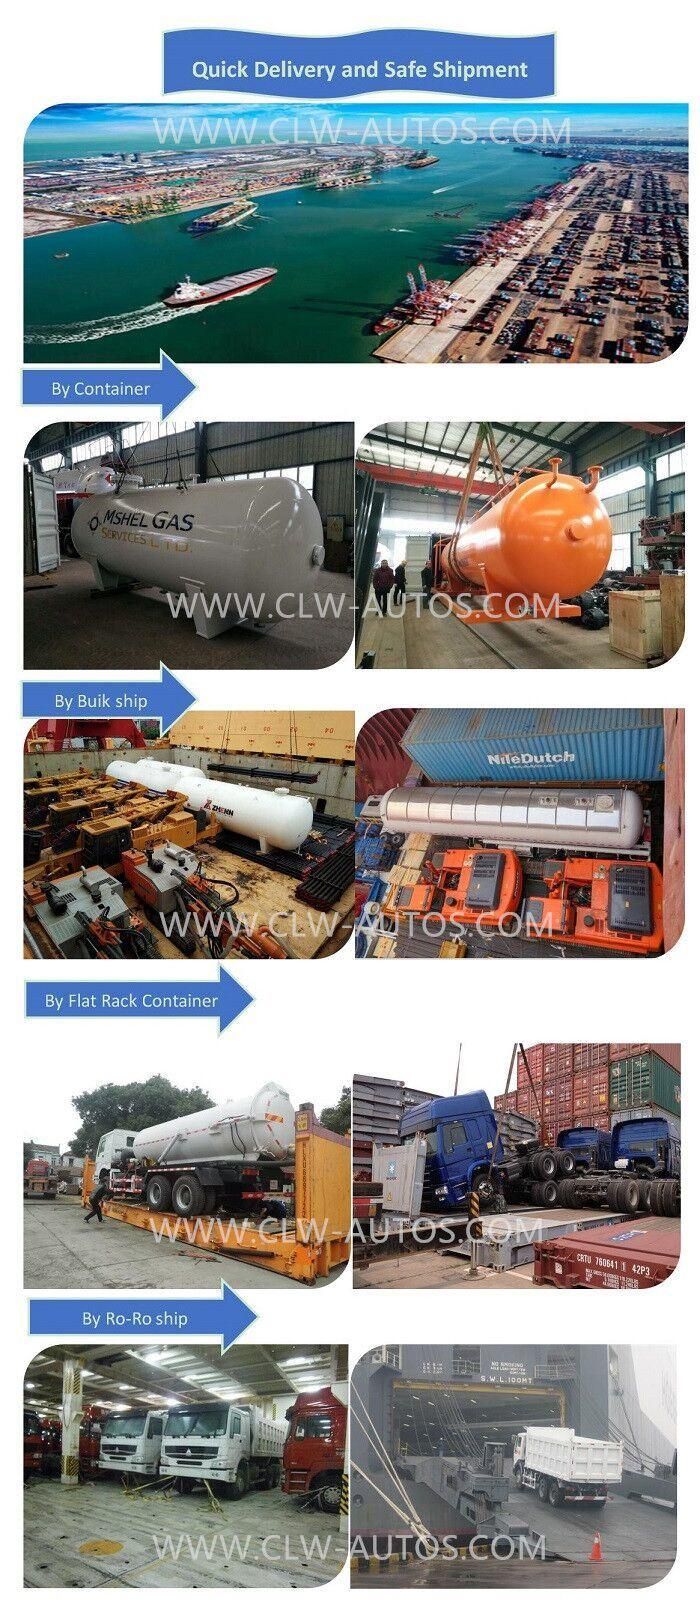 China Factory Price Foton 2000liters 2cbm Side Loading Hanging Barrel Garbage Truck